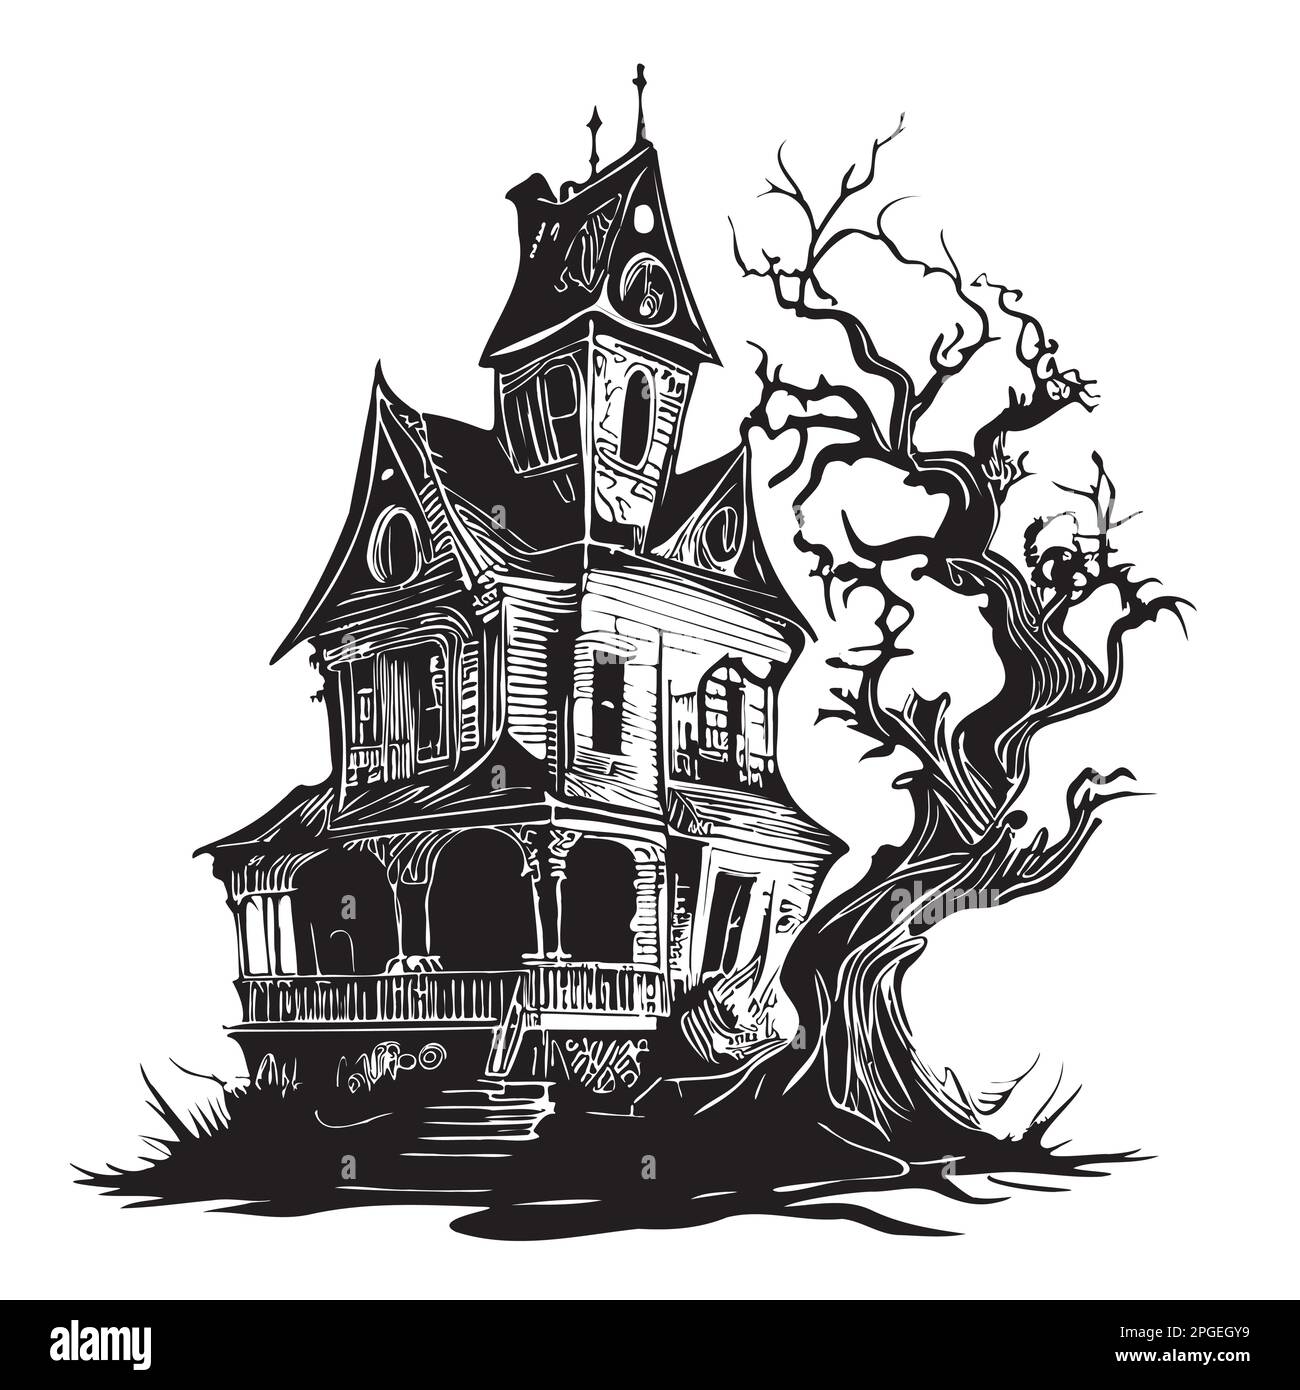 Haunted House Hand Drawn Sketch Vector Illustration Halloween Stock ...